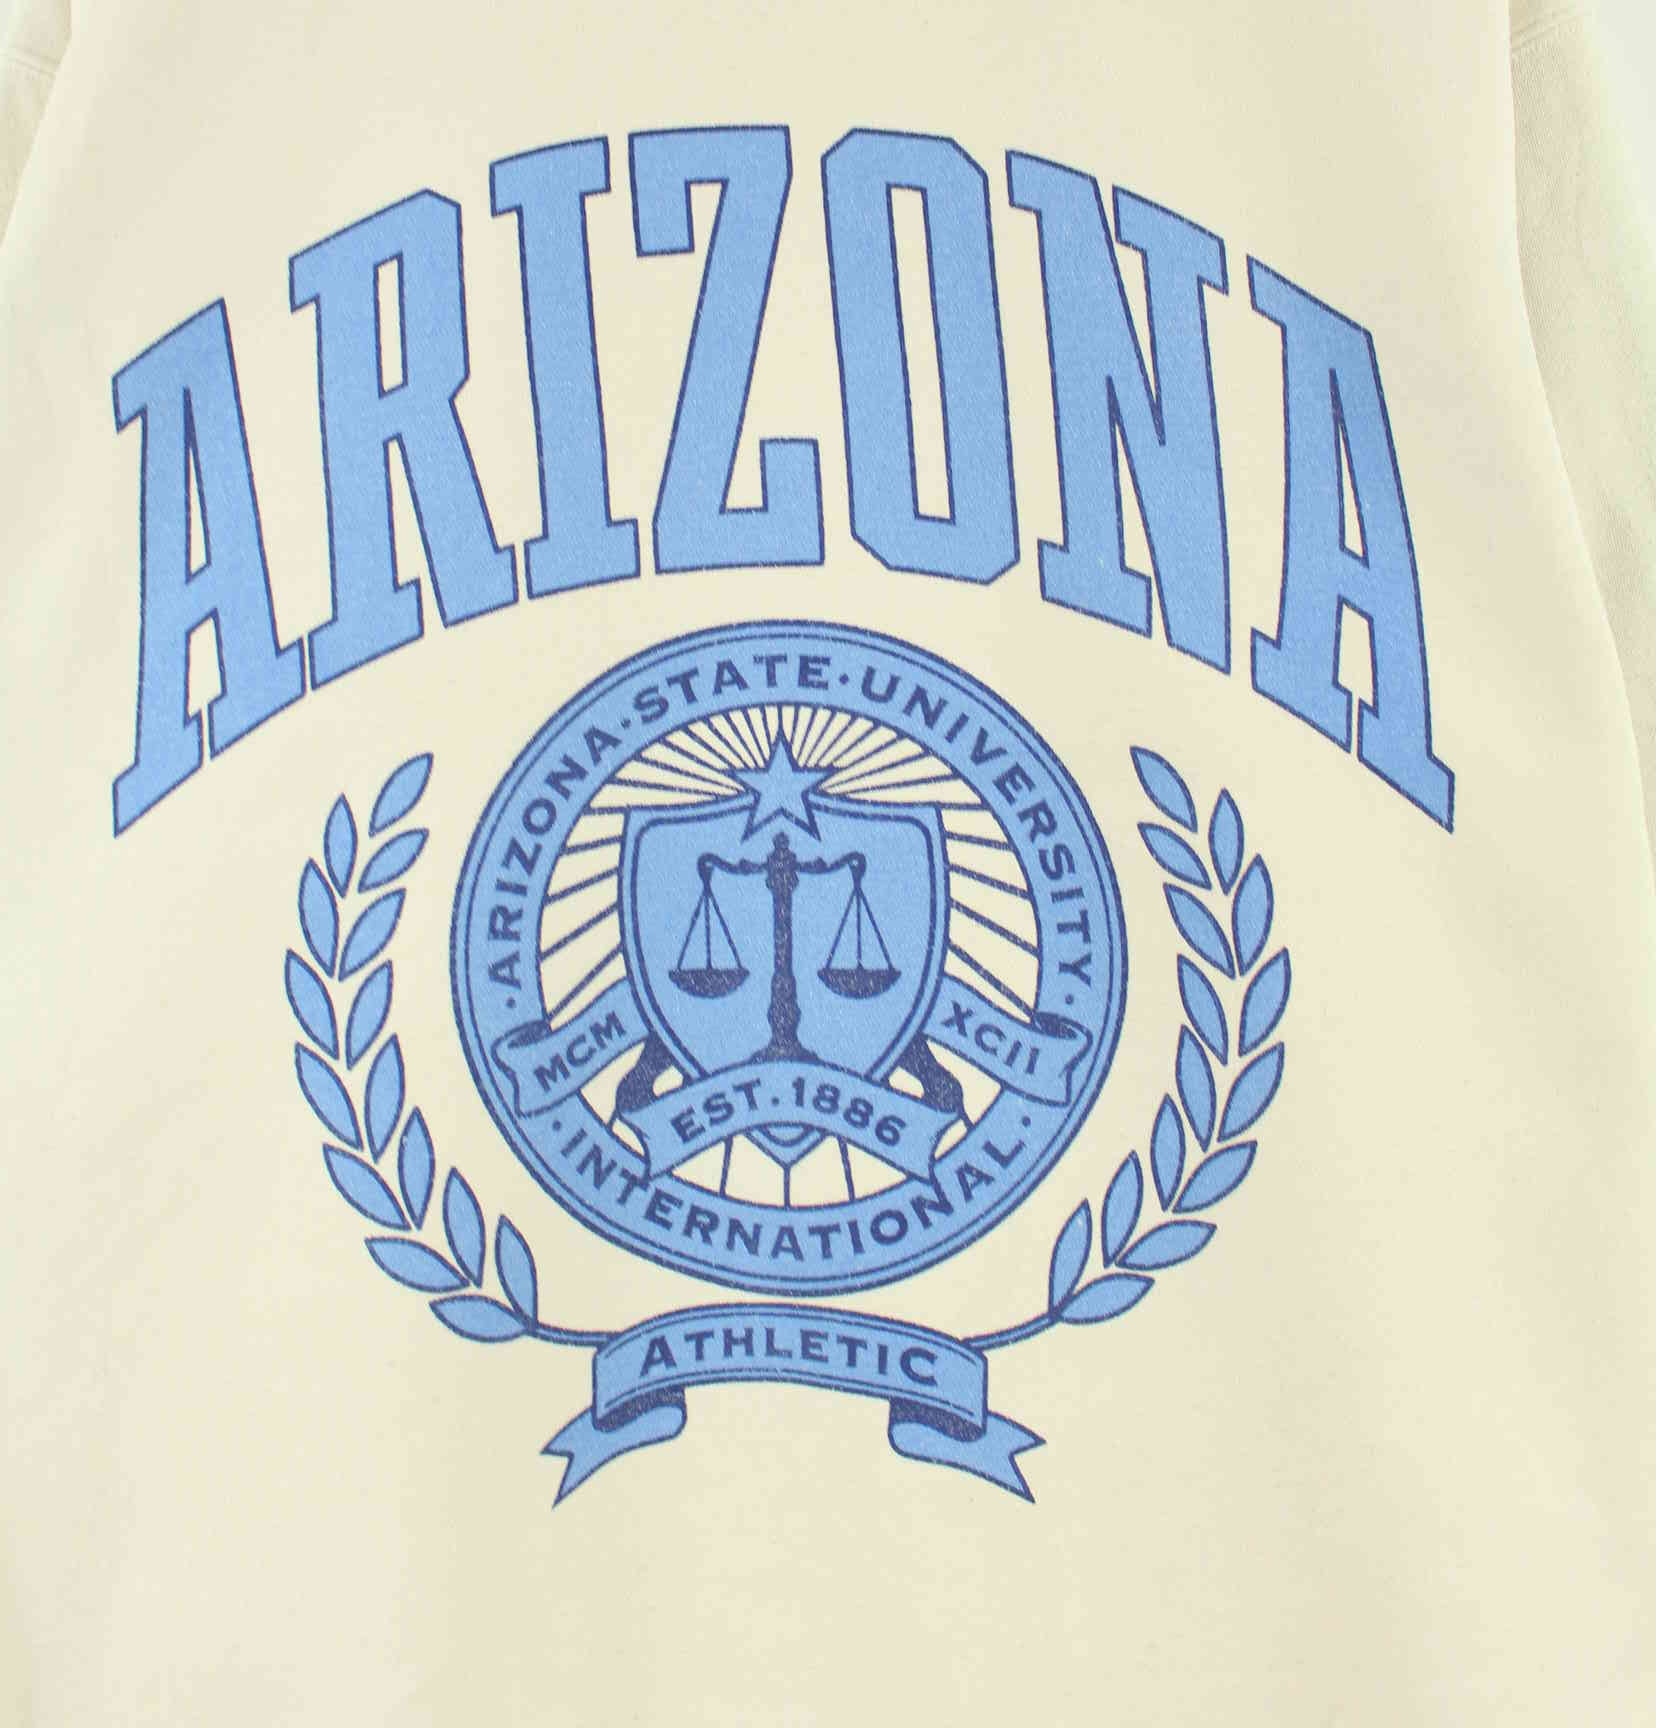 Vintage Arizona Print Sweater Beige M (detail image 1)